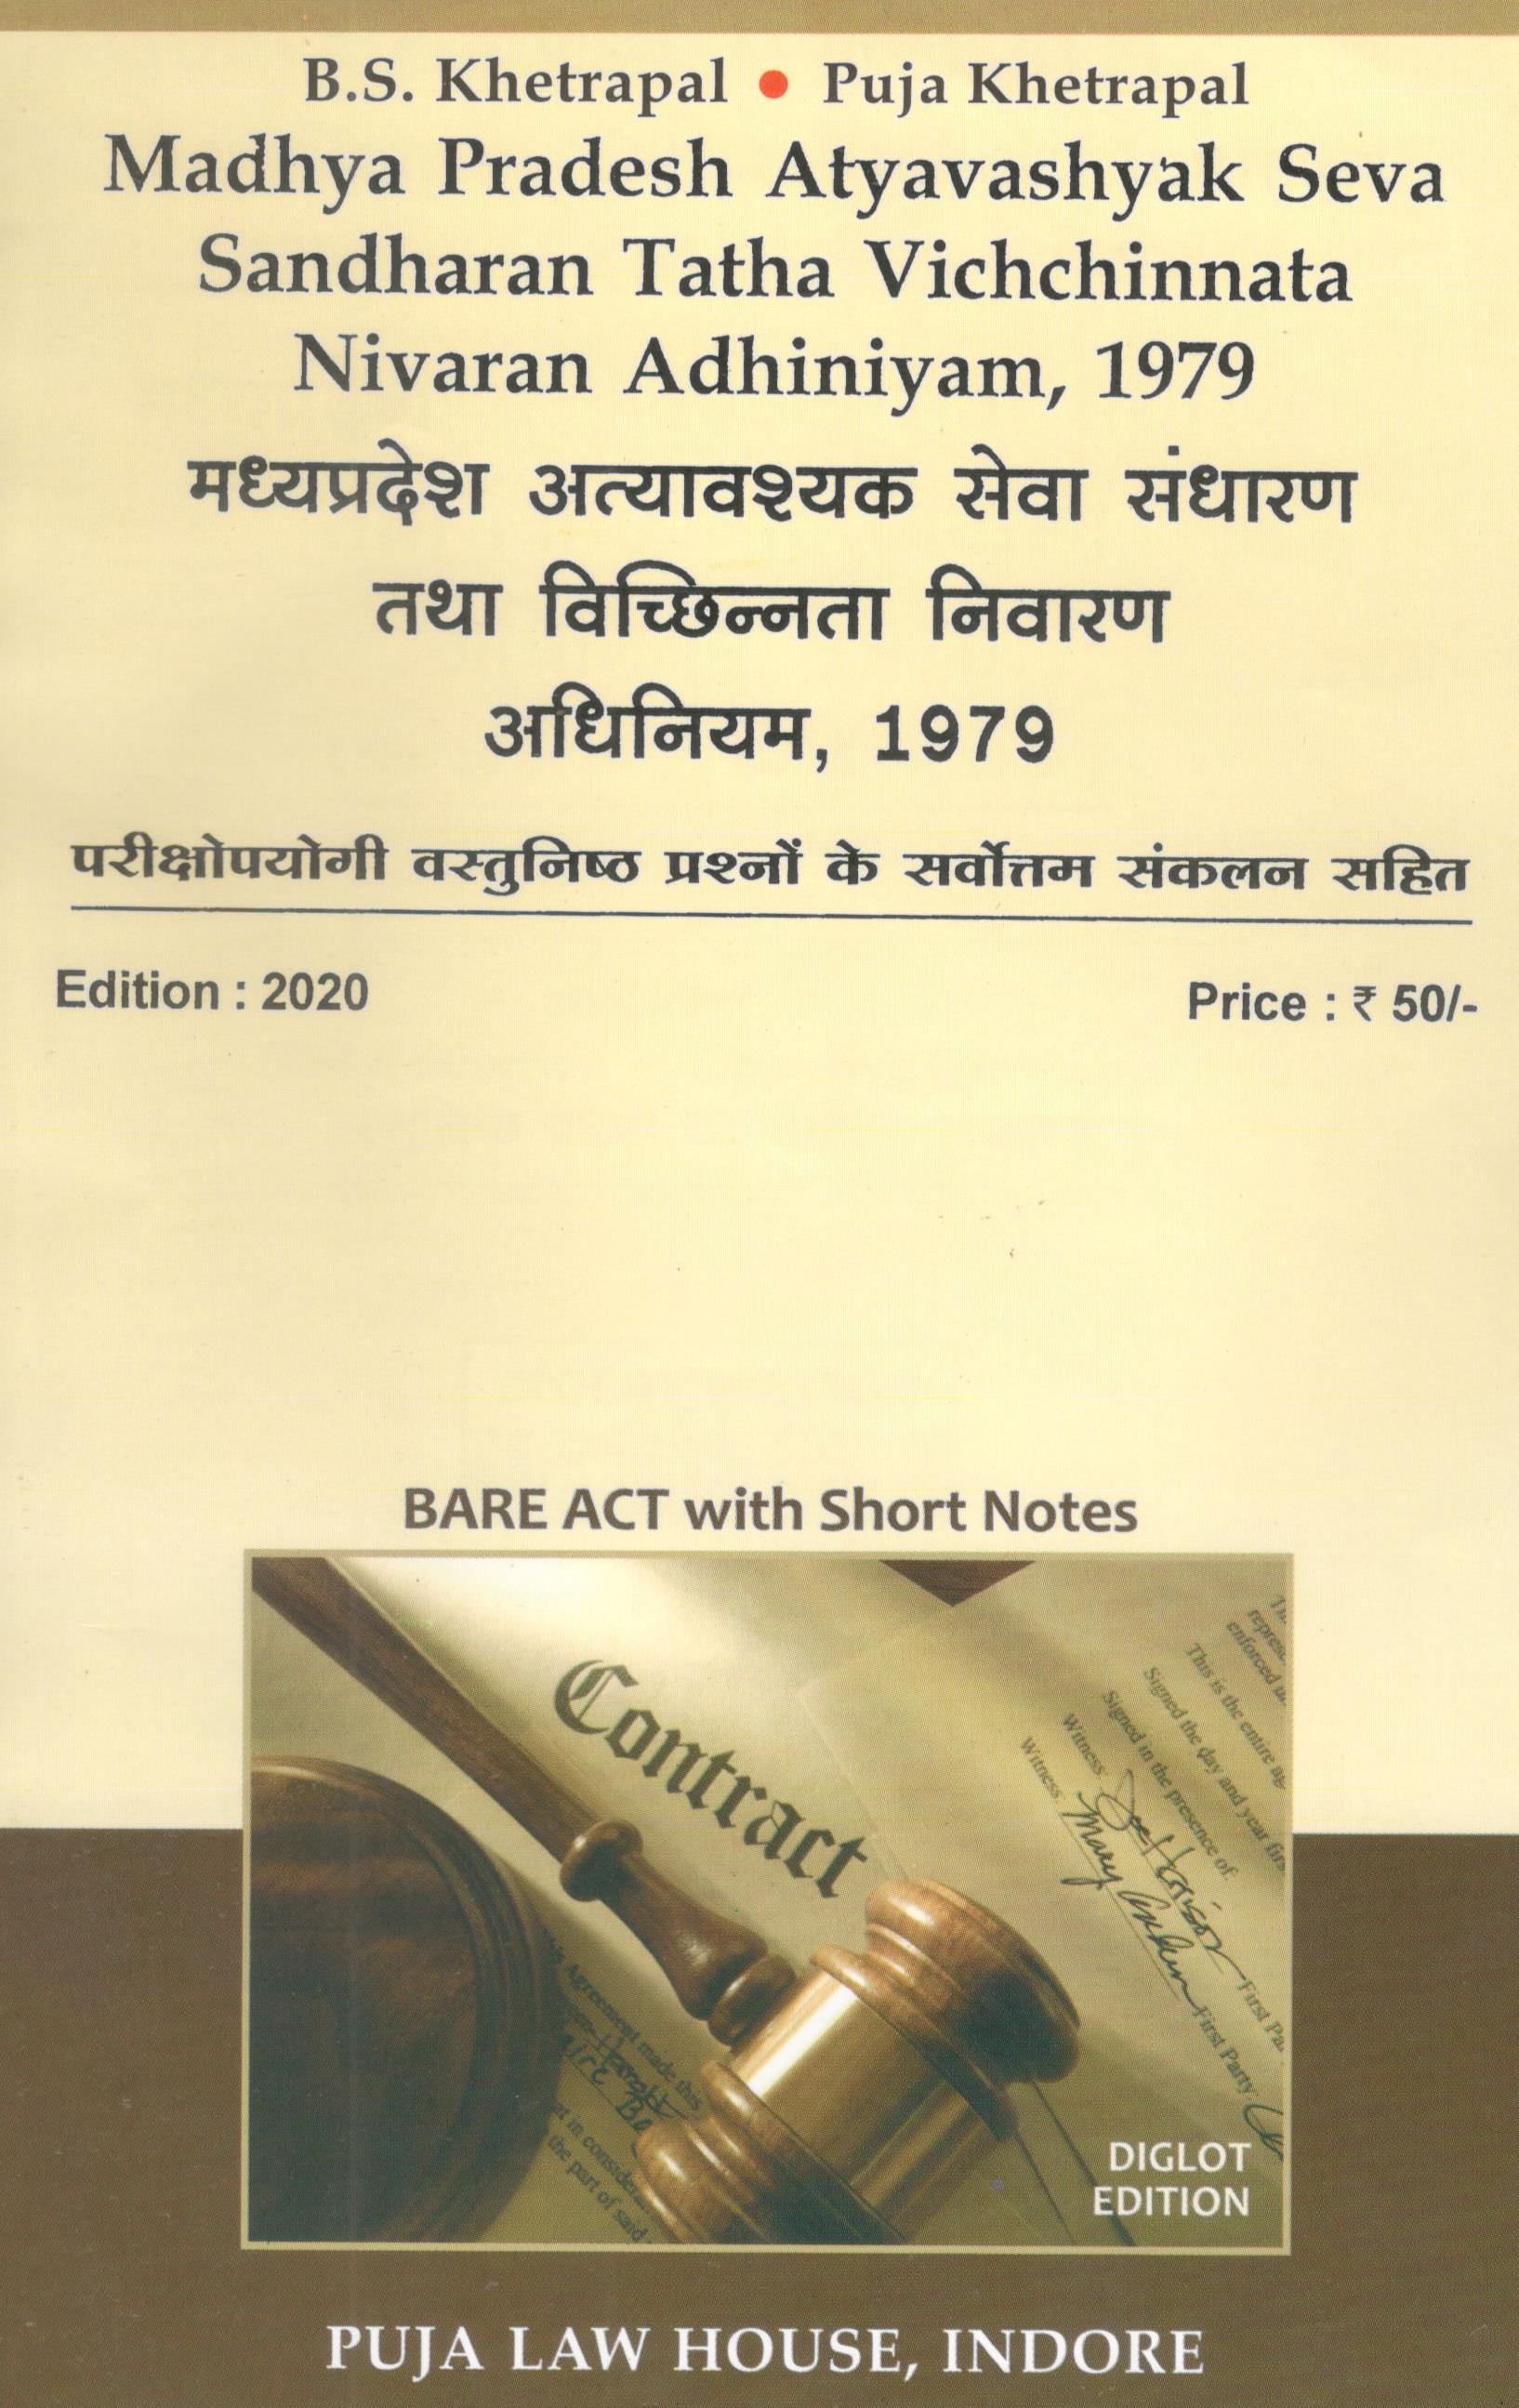  Buy मध्यप्रदेश अत्यावश्यक सेवा संधारण तथा विच्छिन्नता  निवारण अधिनियम, 1979 / Madhya Pradesh Atyavashyak Seva Sandharan Tatha Vichchinnata Nivaran Adhiniyam, 1979